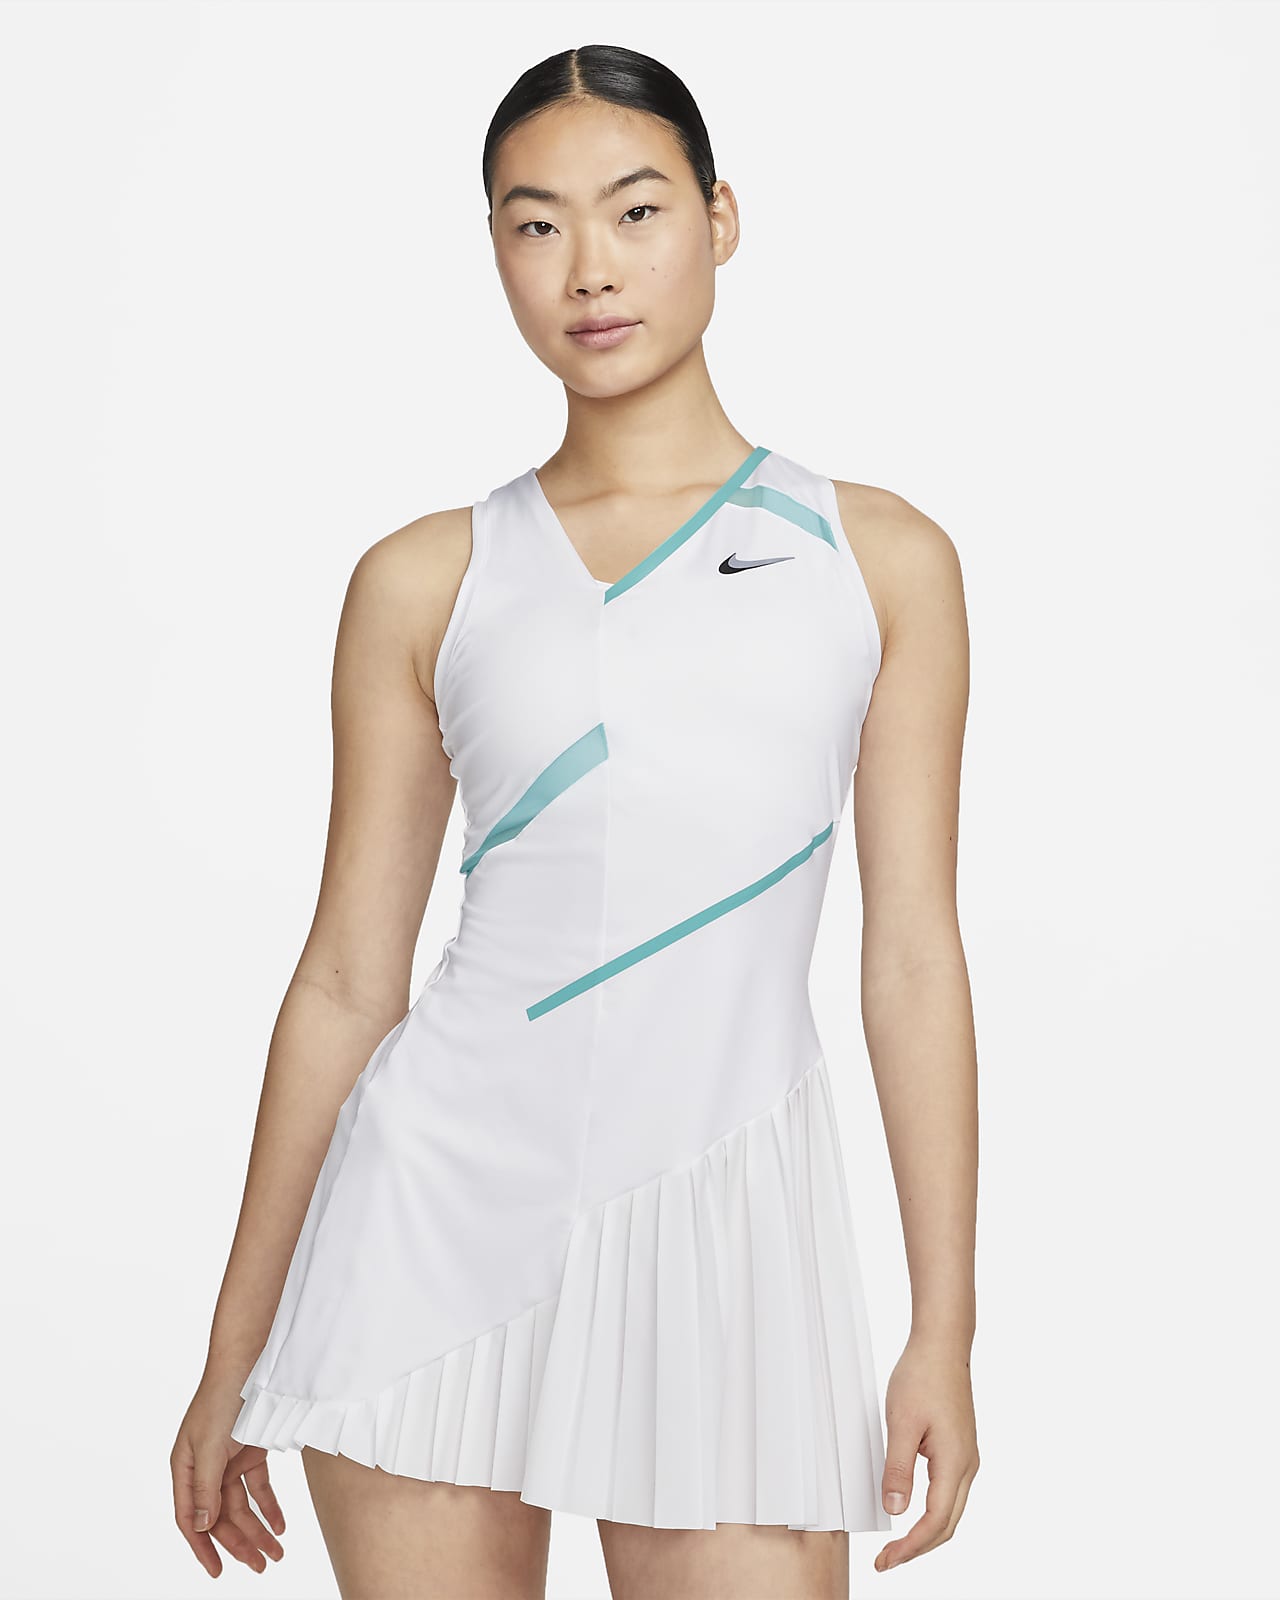 Women's Tennis Clothing. Nike PH